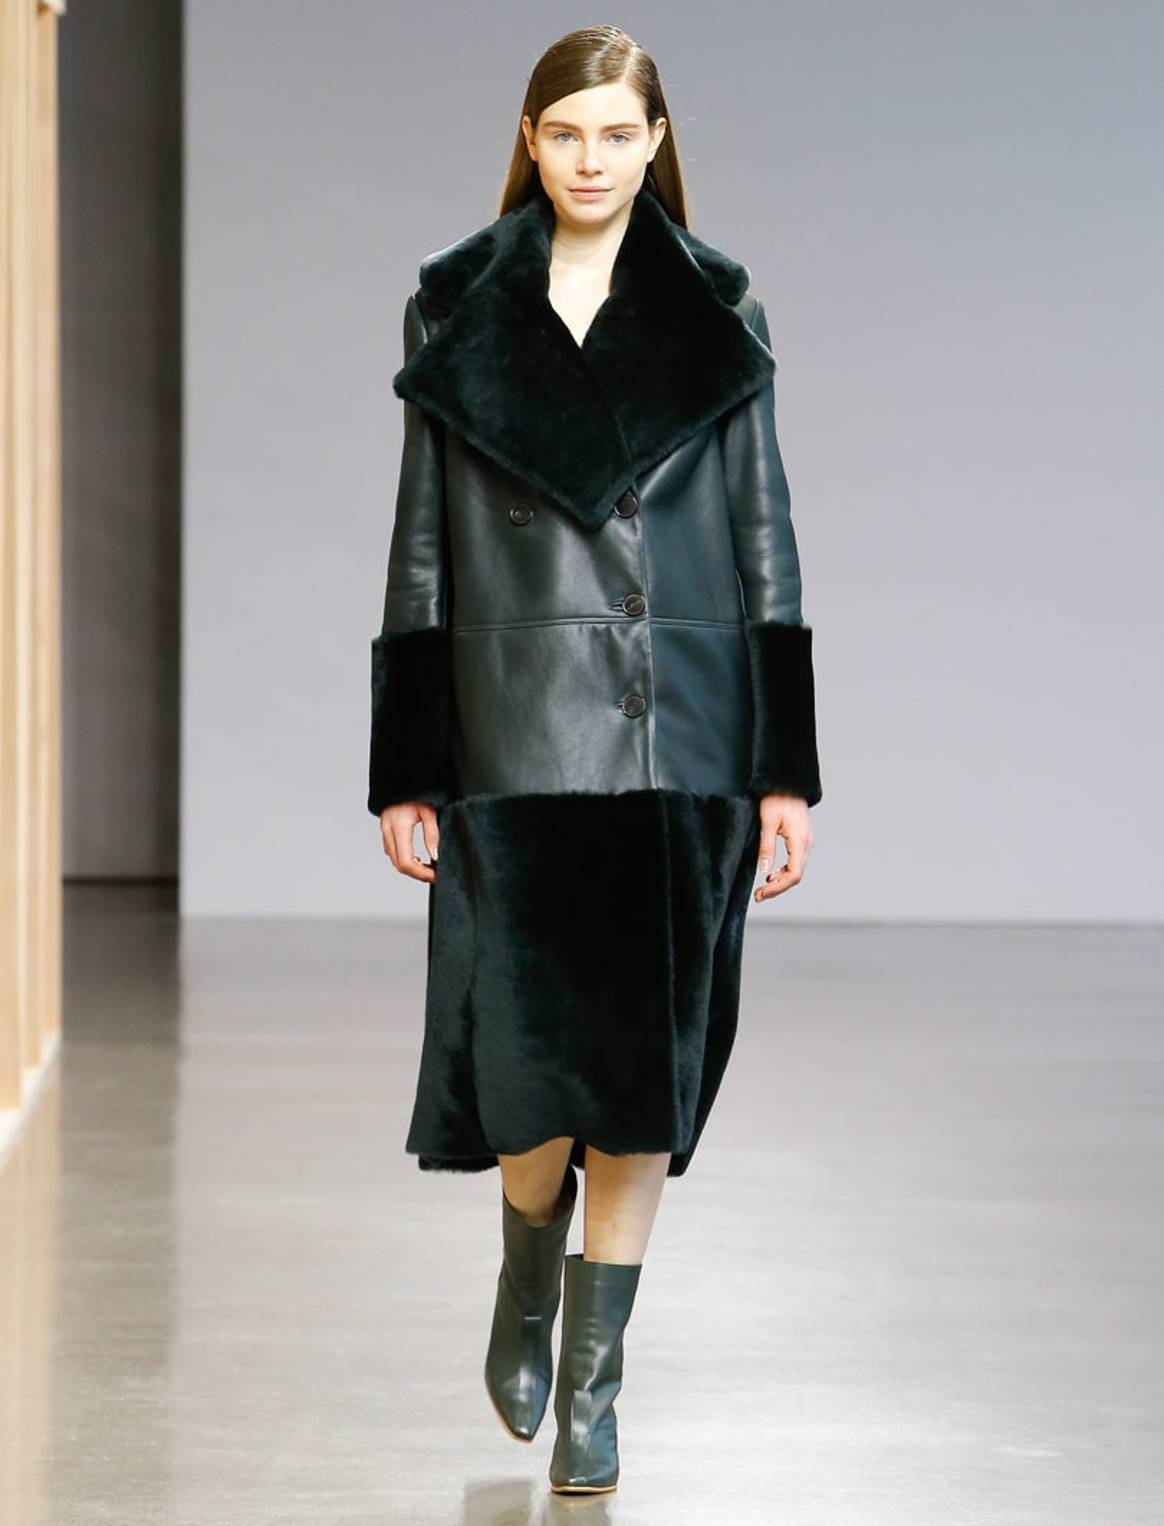 Claudia Li presented the modern princess at New York Fashion Week